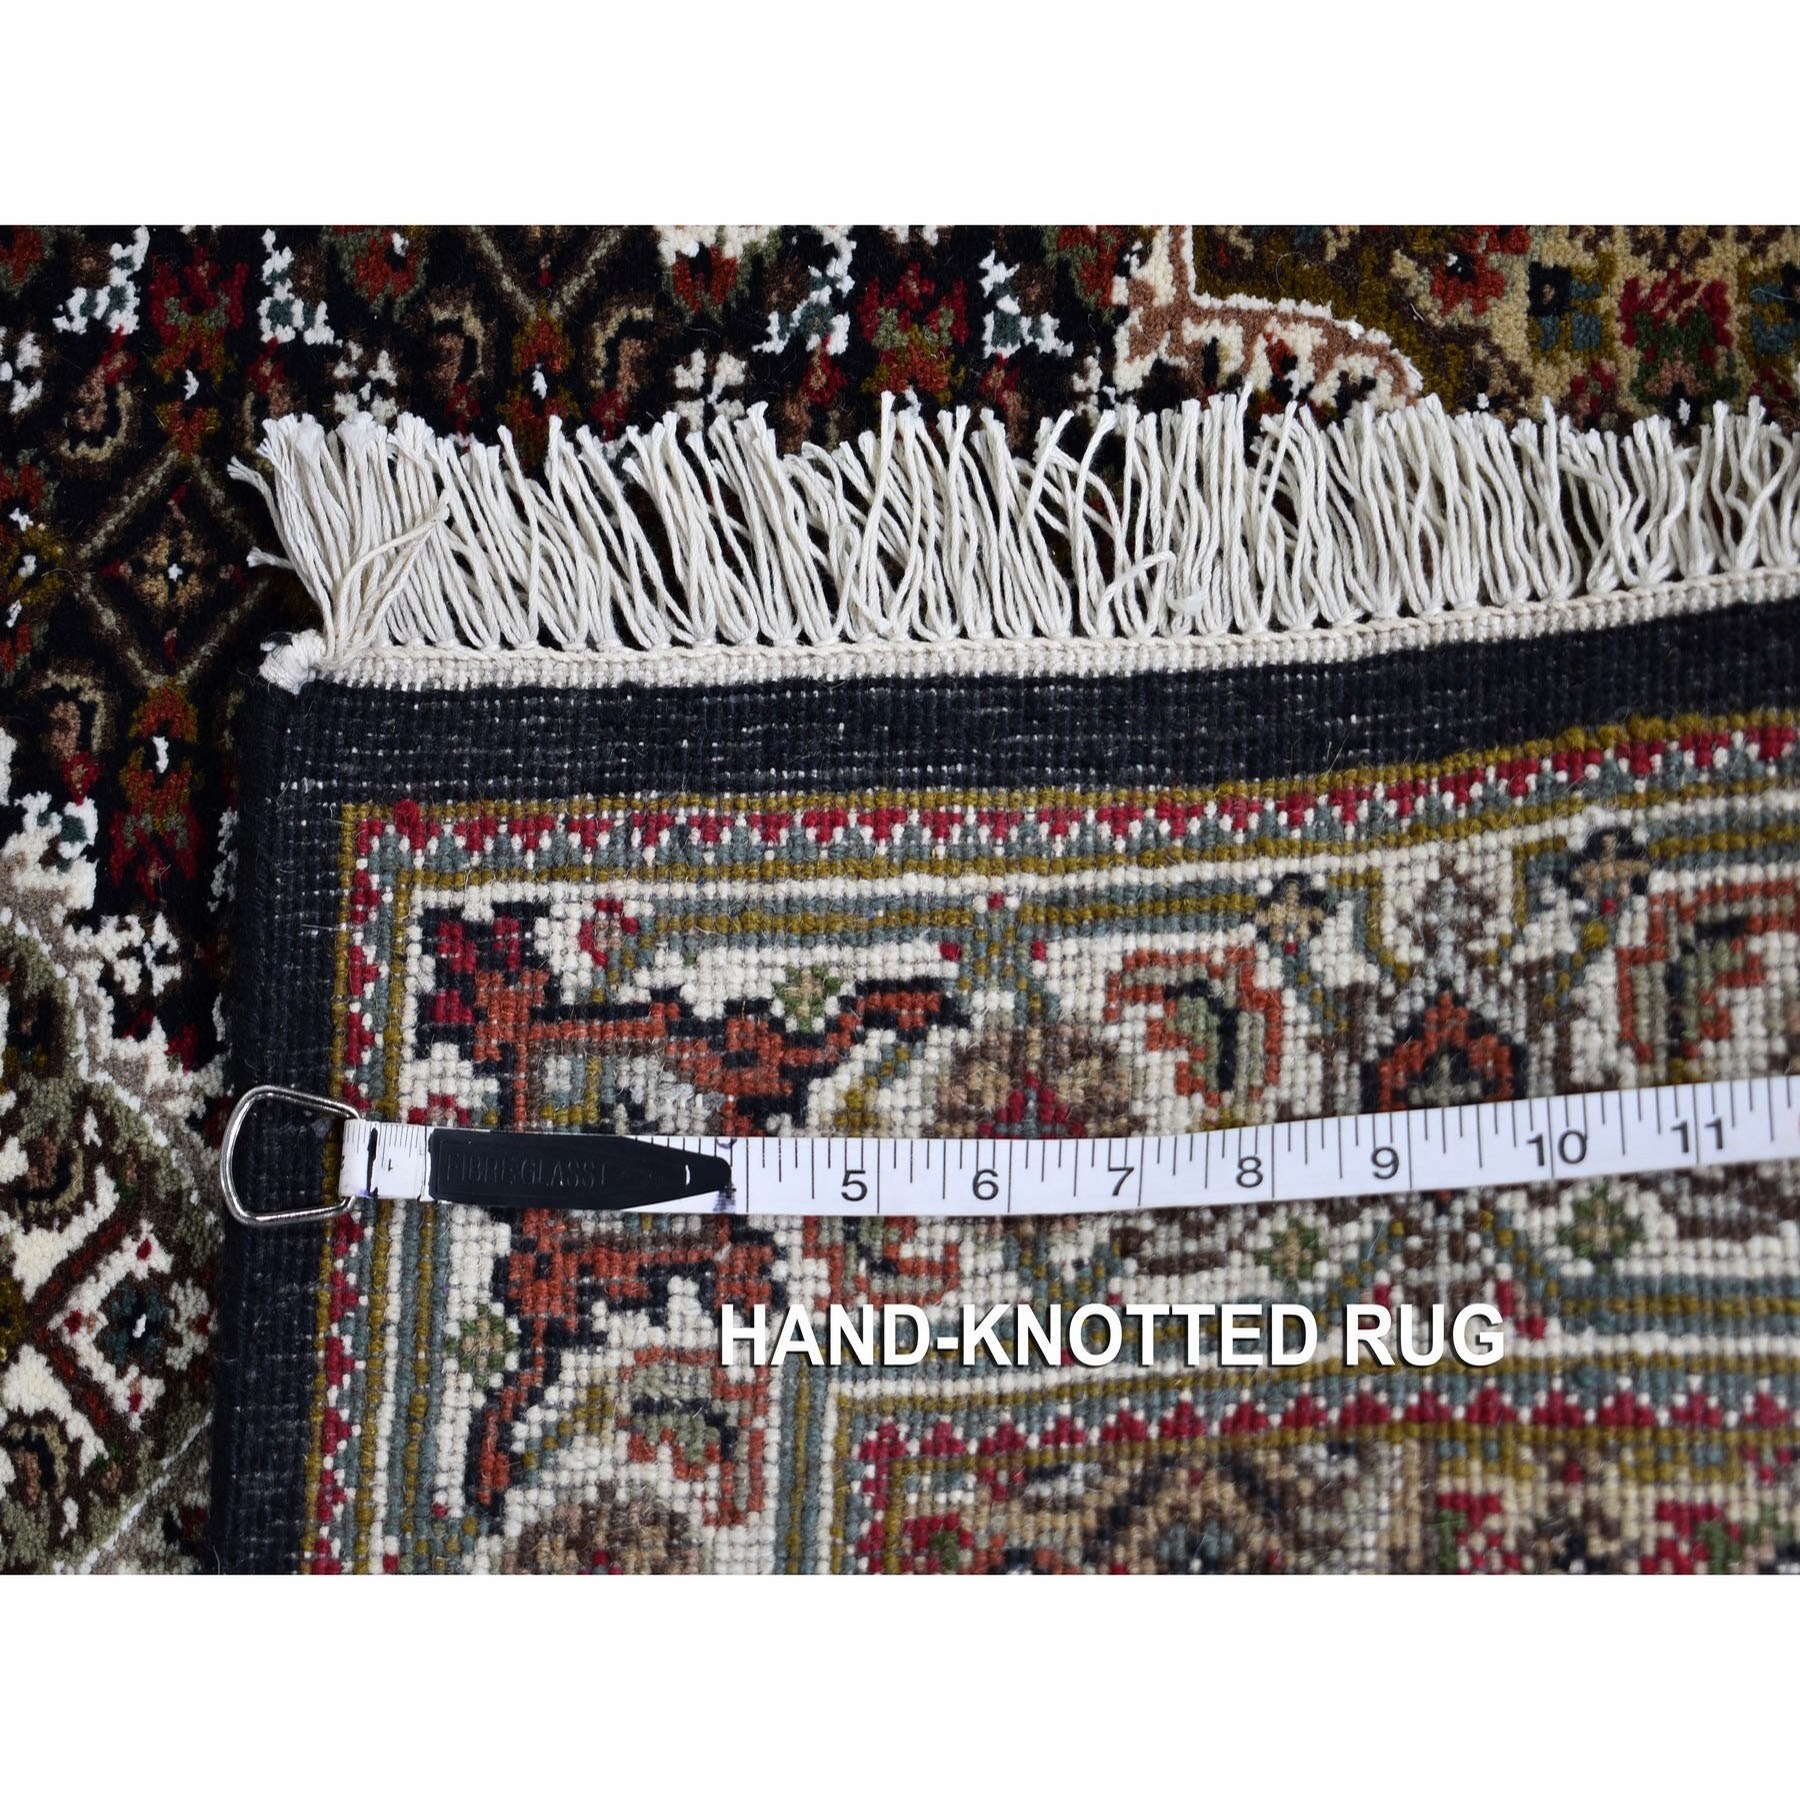 2-8 x13-2   Black Tabriz Mahi Wool And Silk Runner Hand Knotted Oriental Rug 